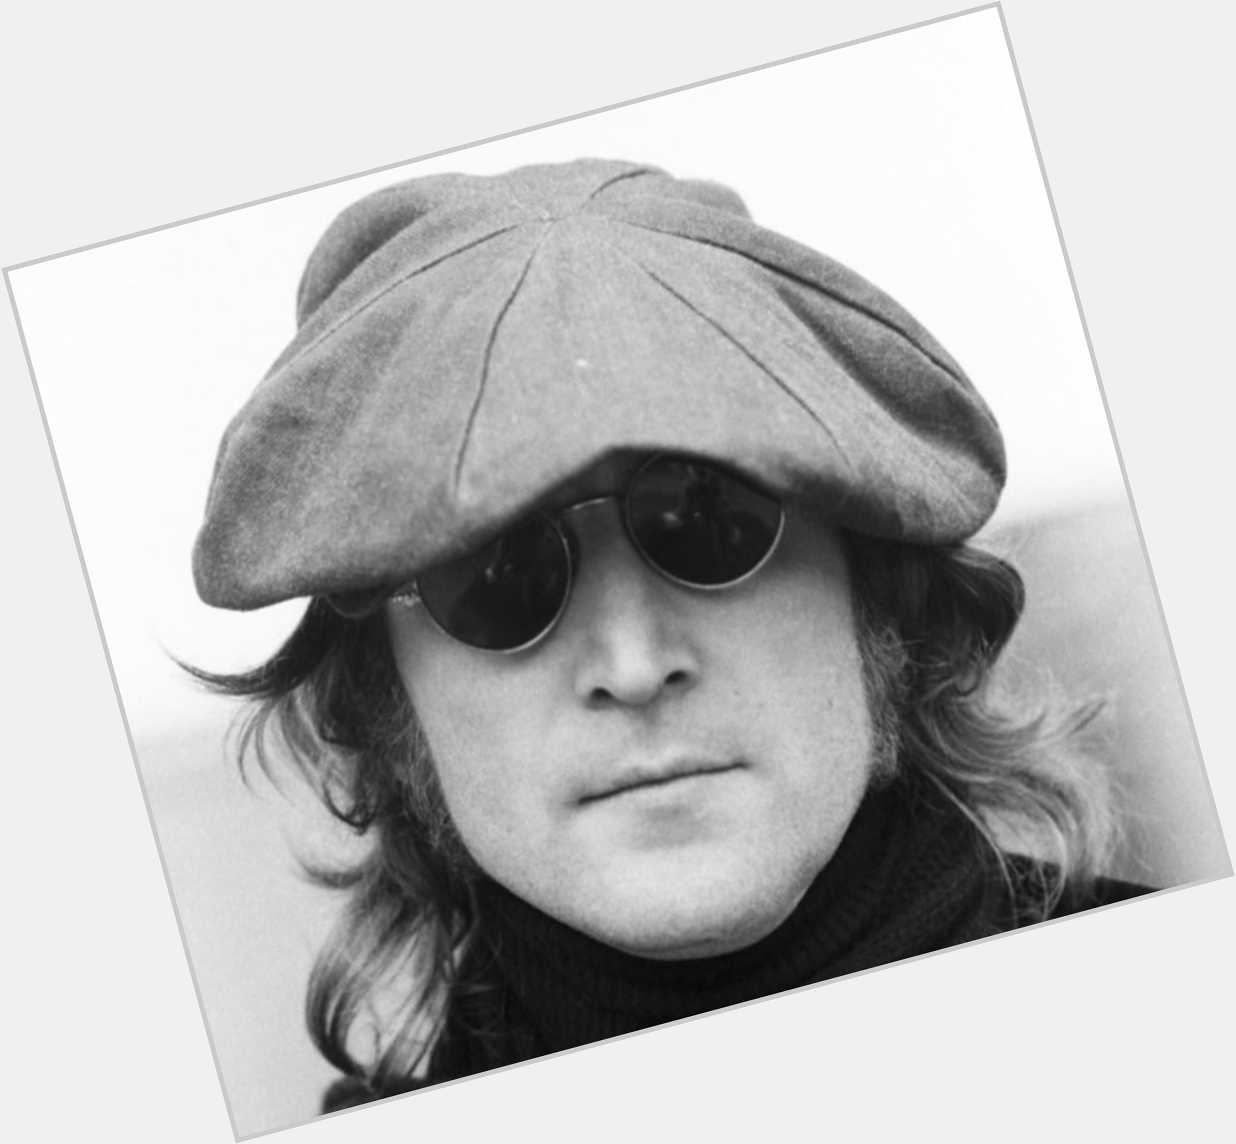 Happy 79th Birthday John Lennon 